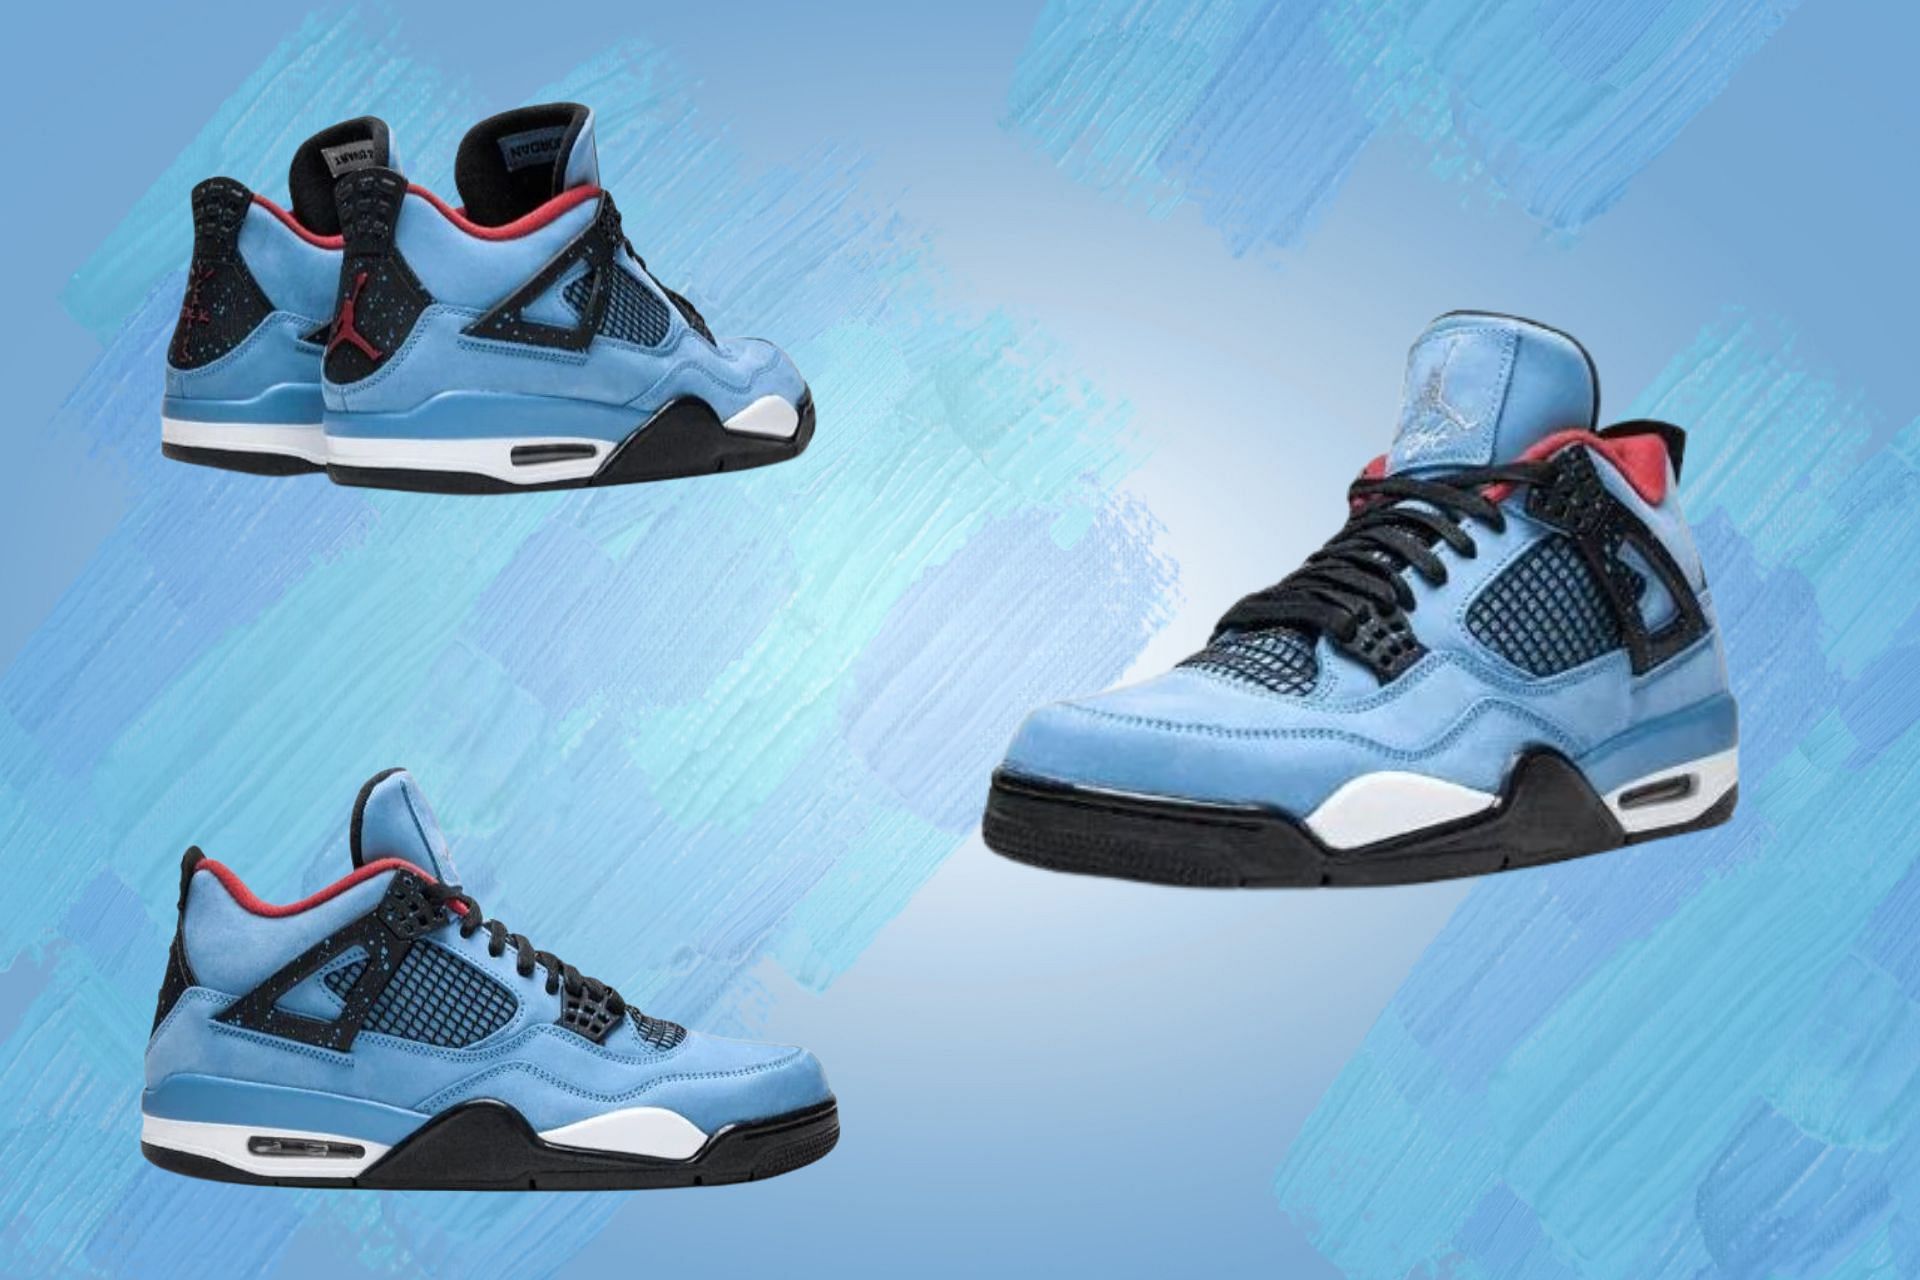 Take a closer look at the Air Jordan 4 shoes (Image via Sportskeeda)